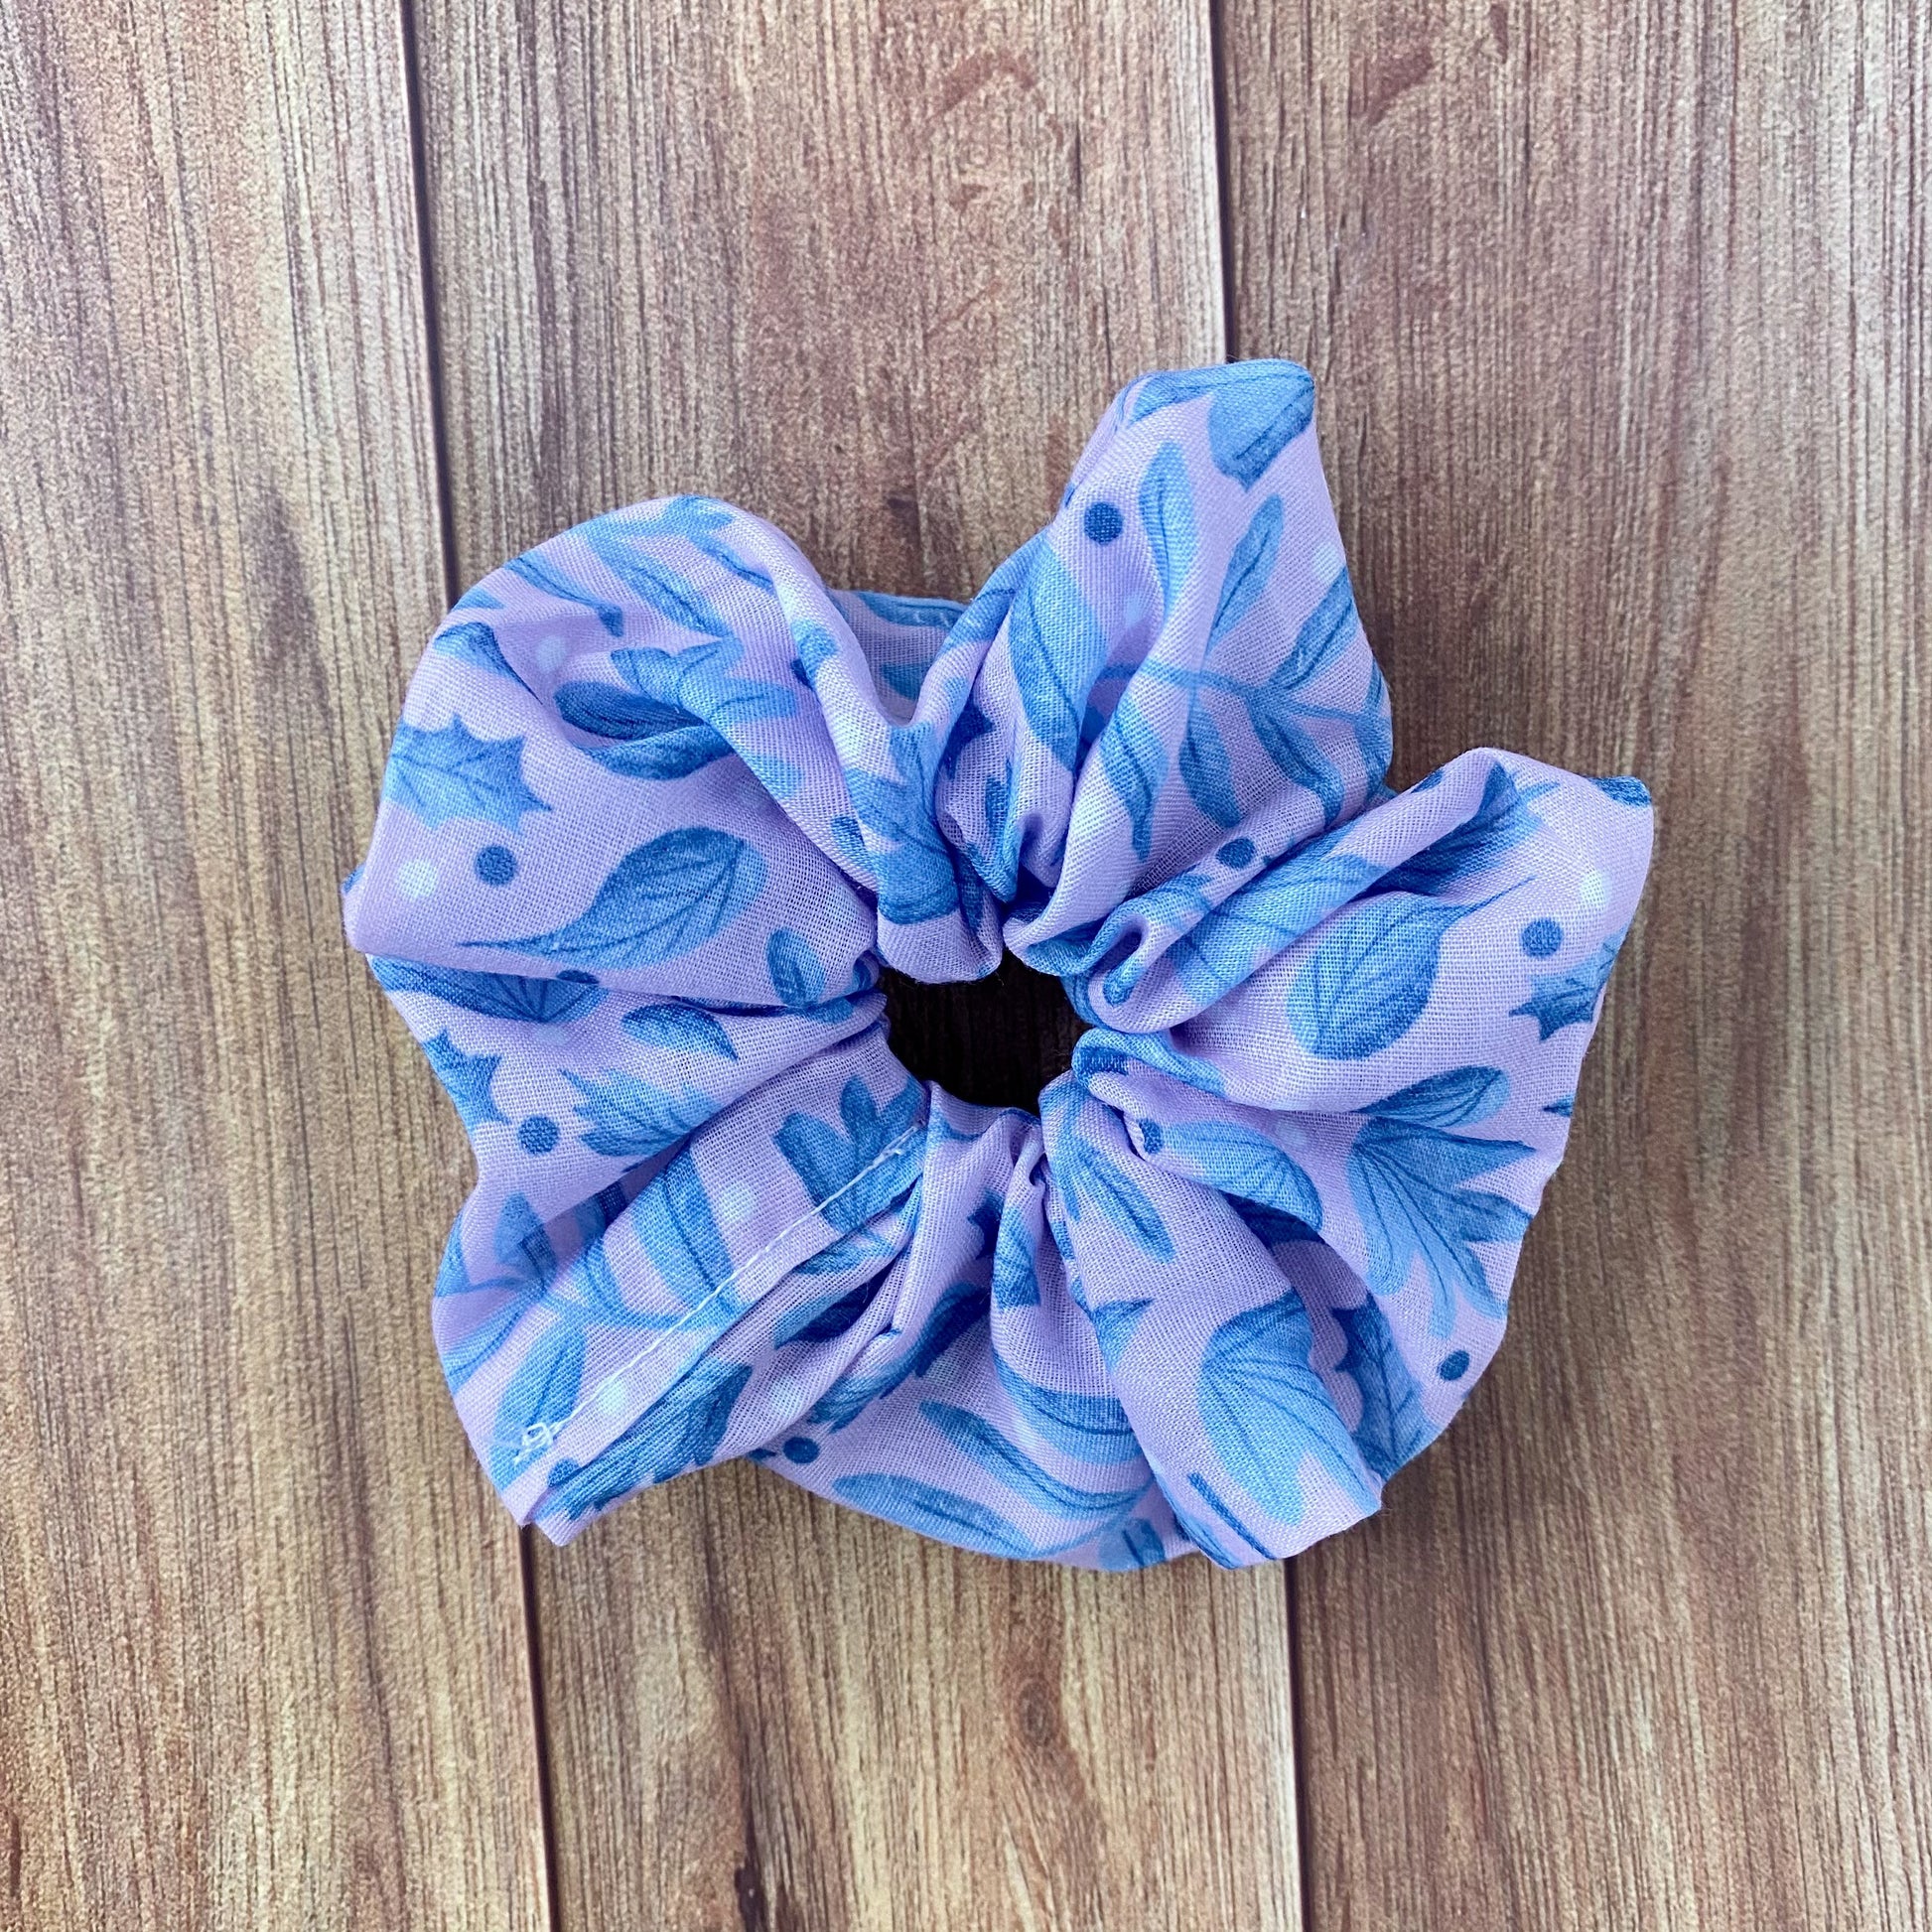 blue foliage scrunchie on wooden background